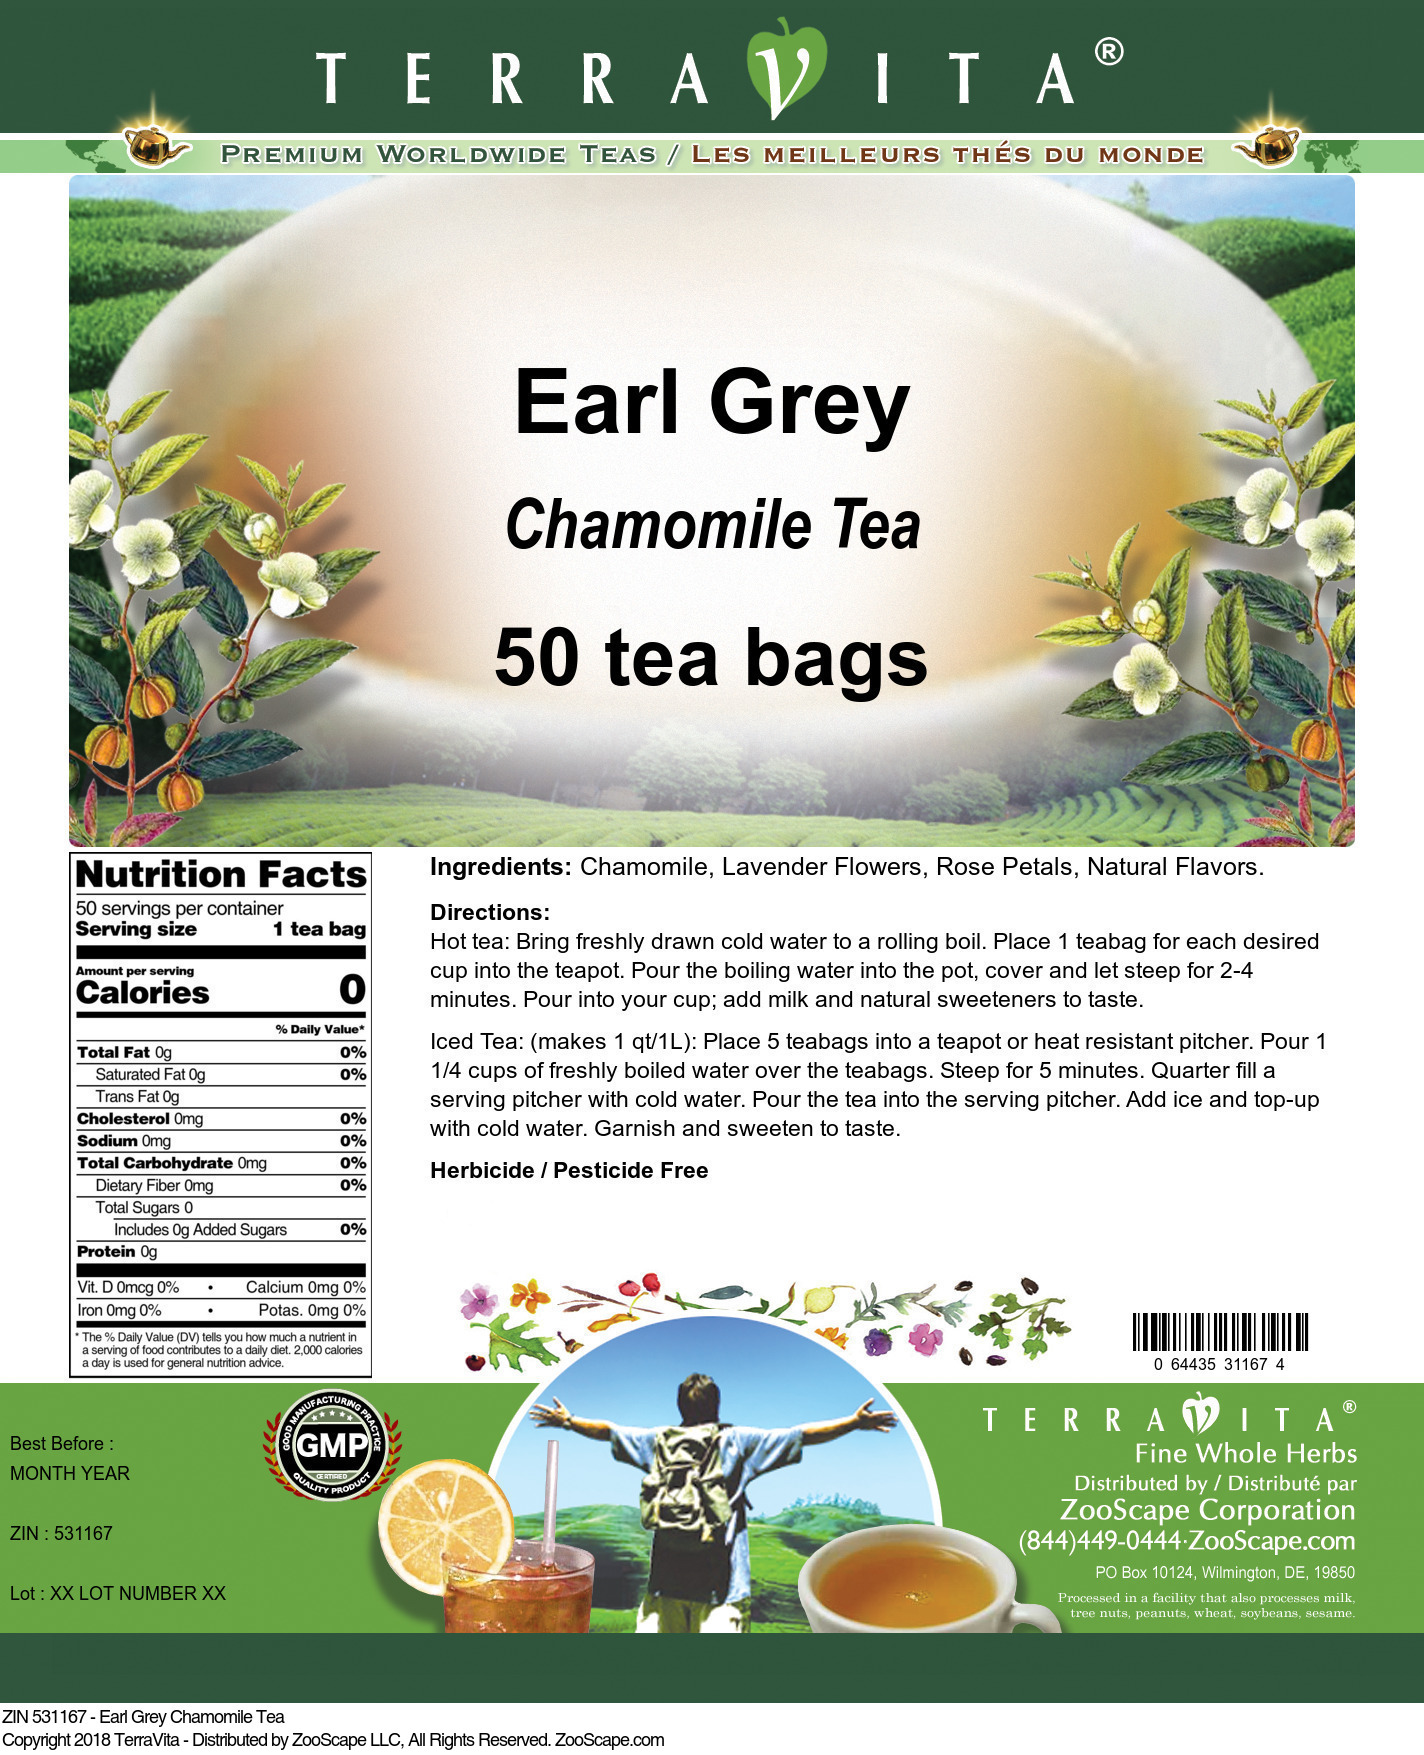 Earl Grey Chamomile Tea - Label